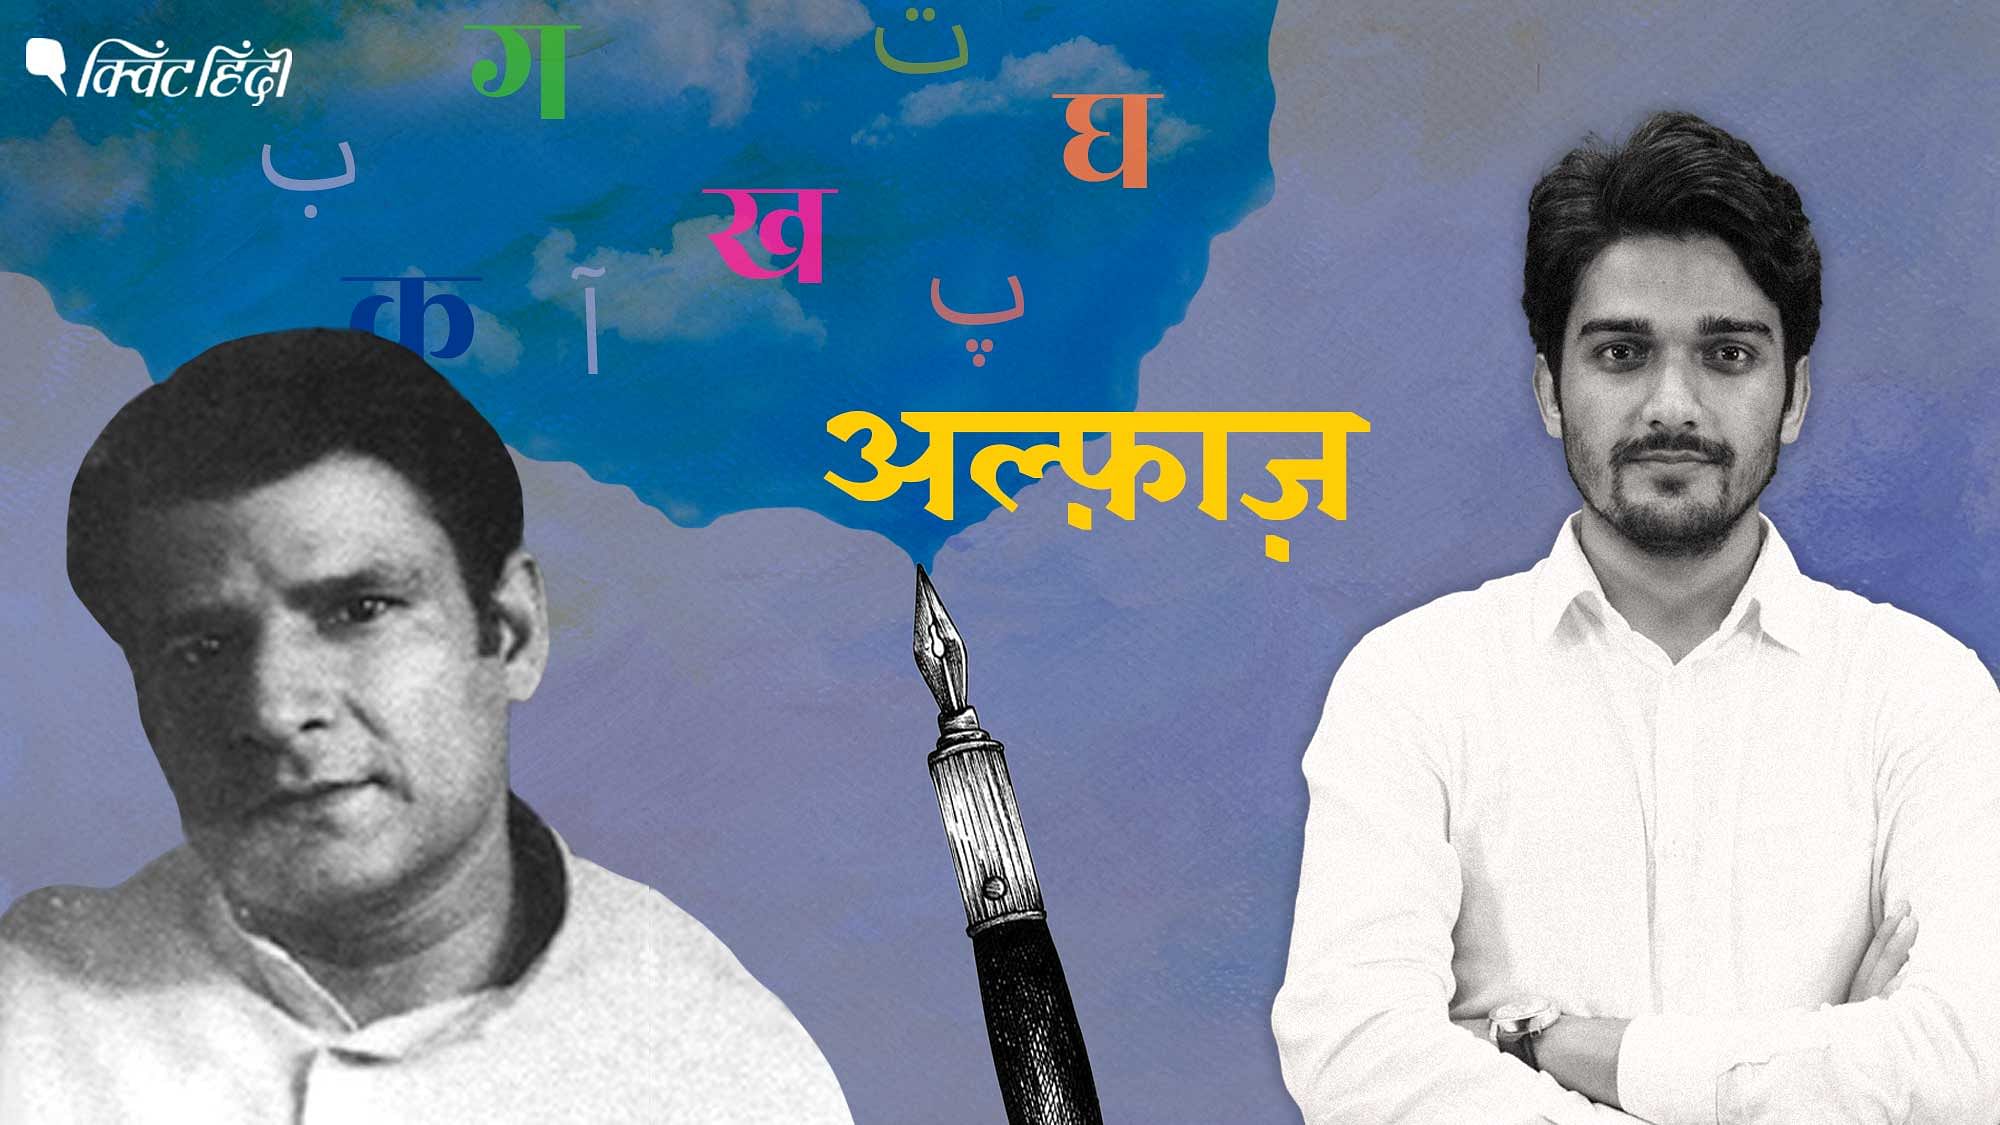 <div class="paragraphs"><p>Dushyant Kumar: हिंदी का बागी गजलकार, जो आम लोगों की आवाज बनकर हुकूमत से टकराया</p></div>